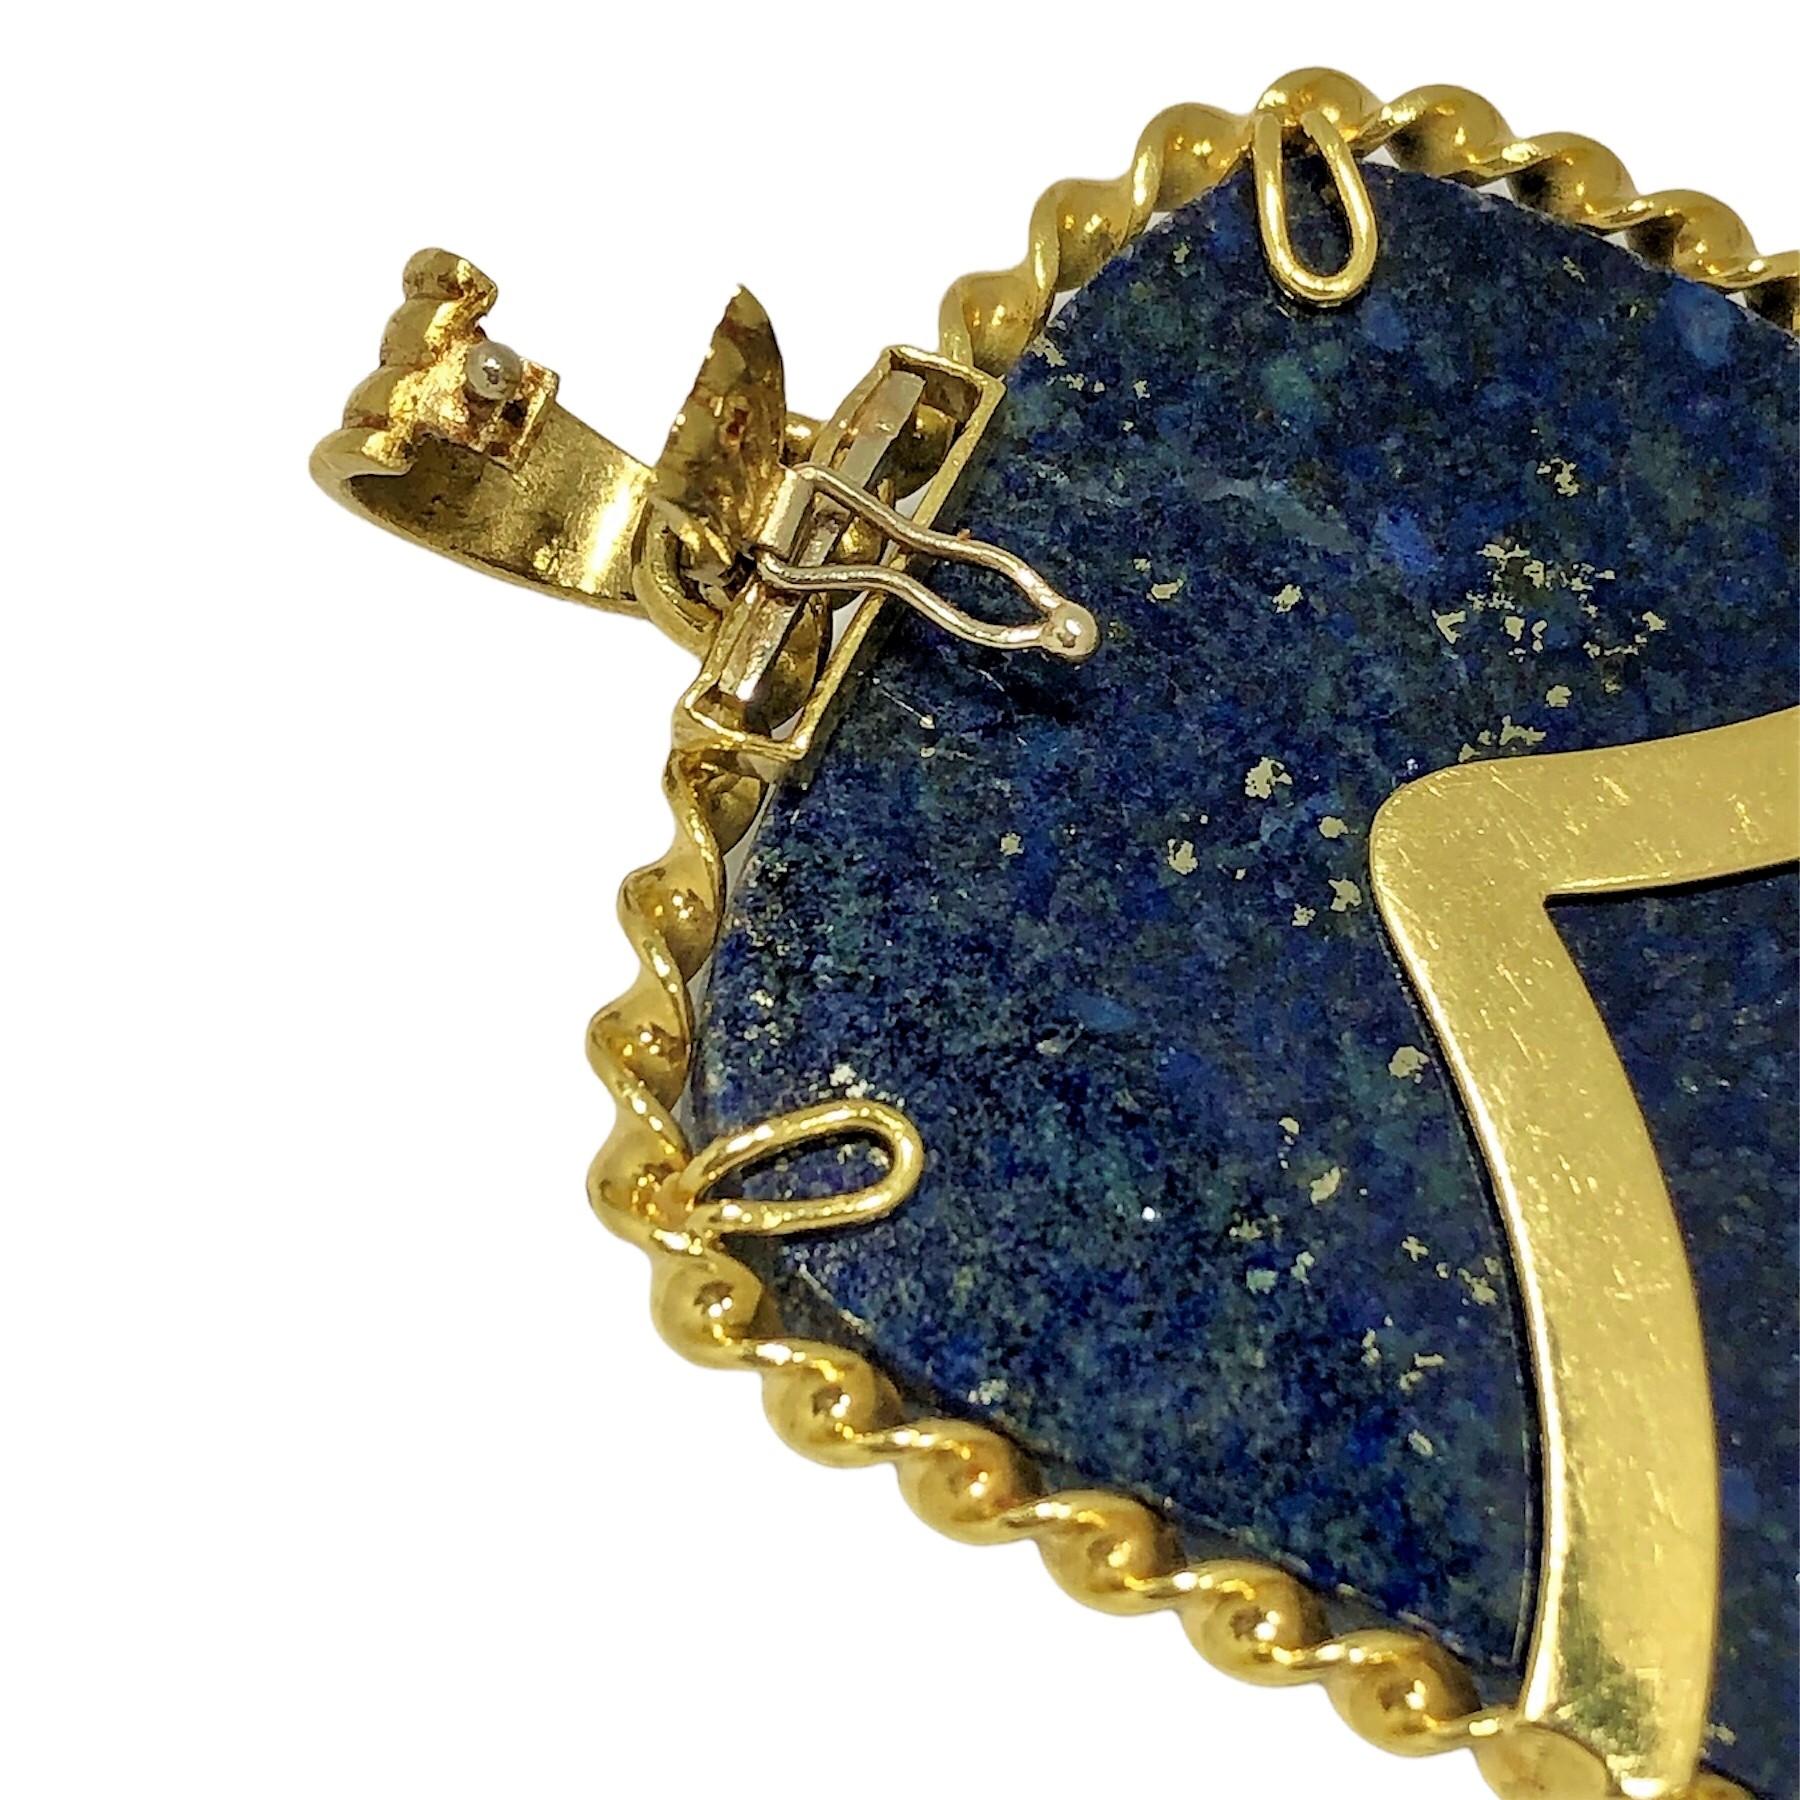 Uncut Large Scale 18K Lapis Lazuli Pendant with Mayan Totem Motif For Sale